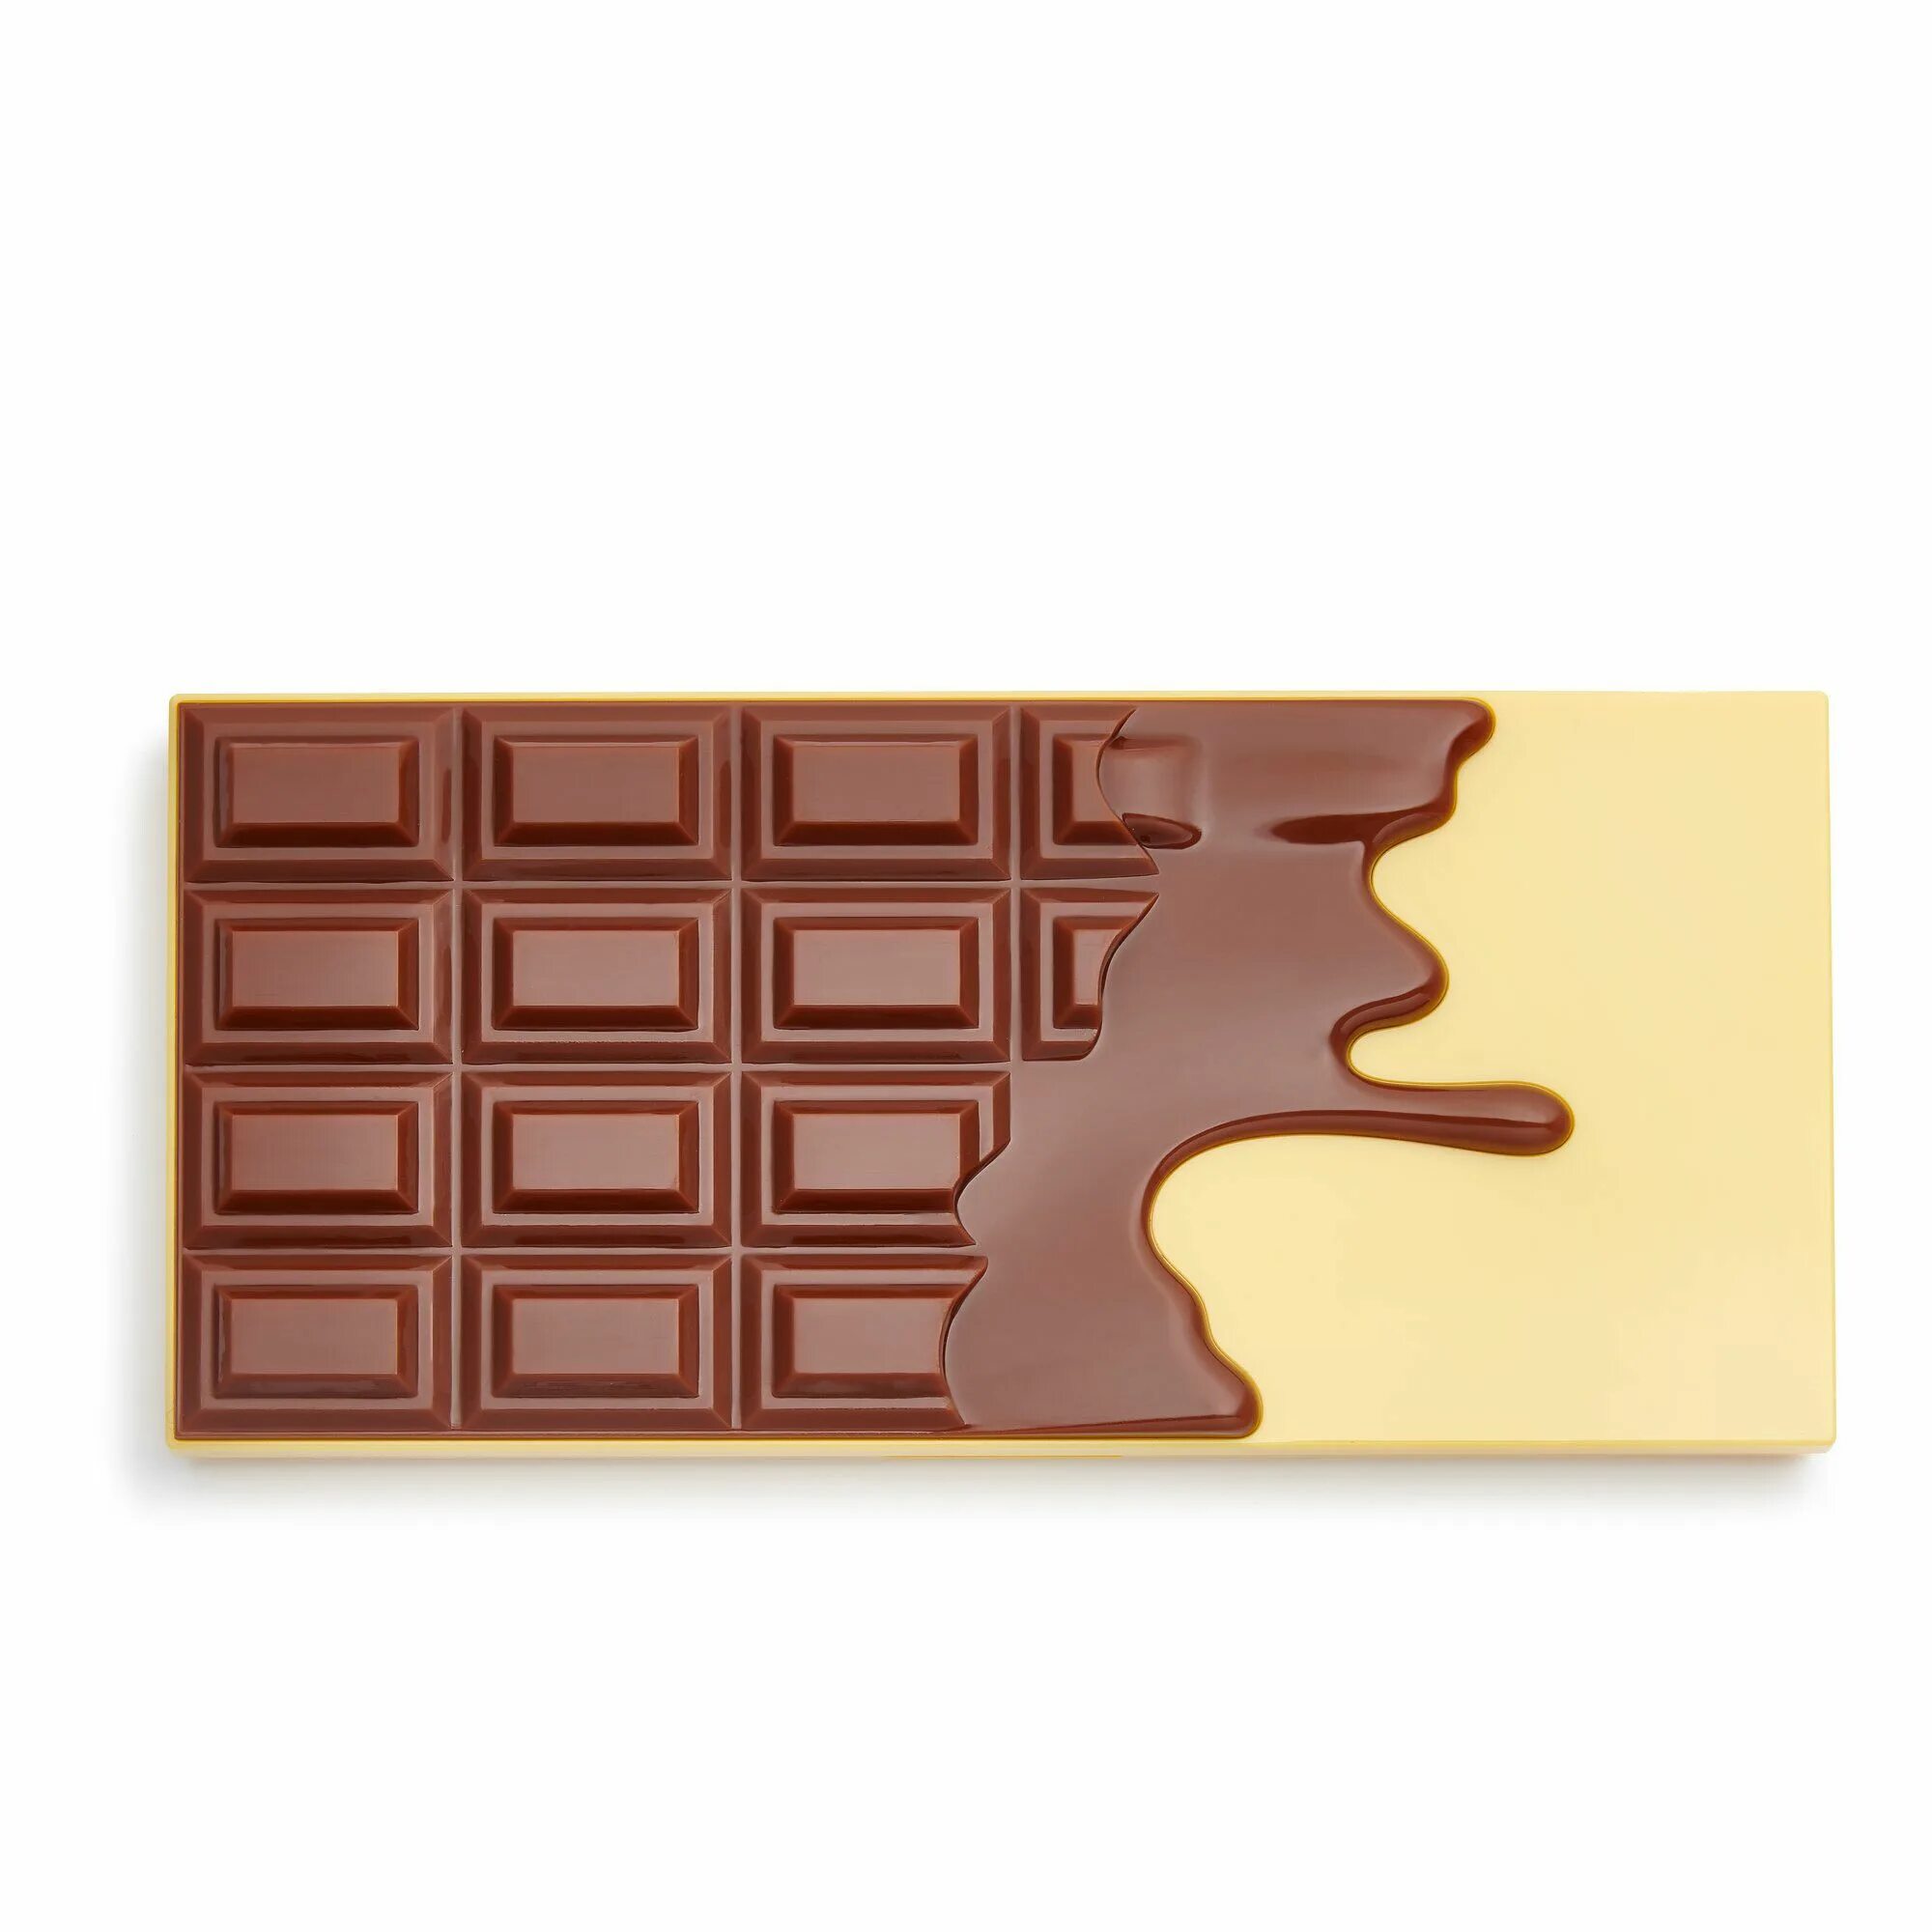 Революшен шоколадка. Палетка теней революшен шоколадка. I Heart Revolution Chocolate Creme Brulee. Палетка революшен тени шоколадные. Палетки революшен шоколадки.